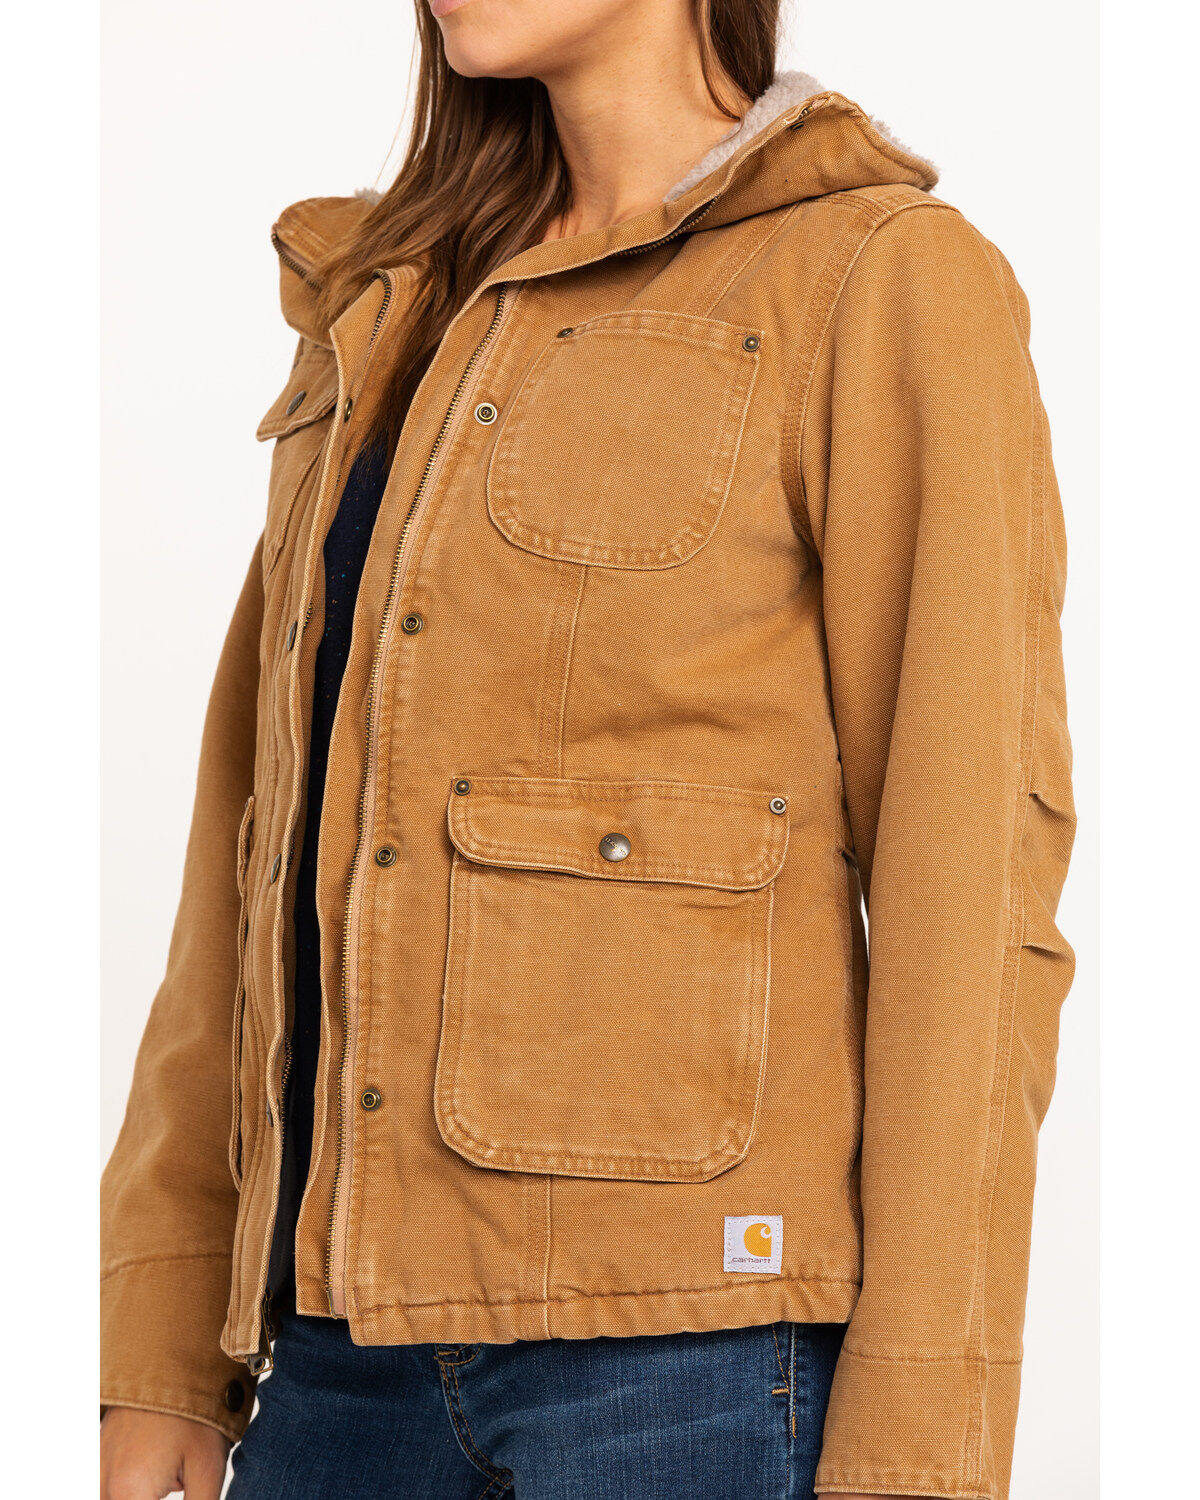 Carhartt Women S Jacket Size Chart